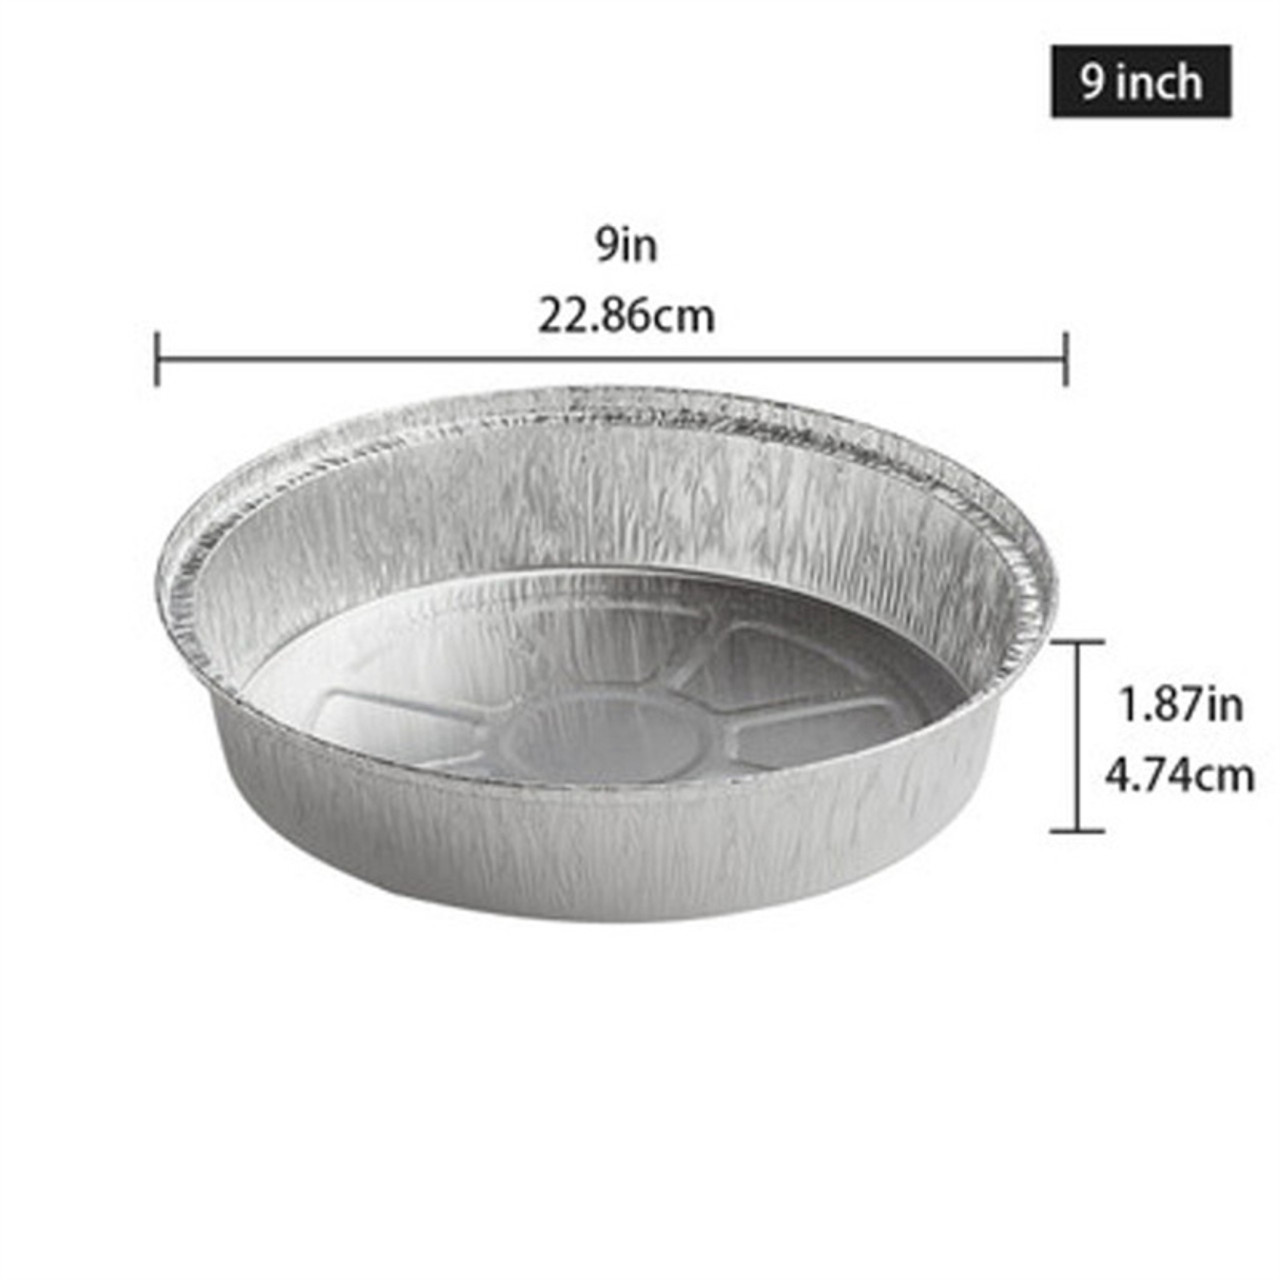 4 inch Aluminum Round Cake Pan – My Kitchen Gadgets